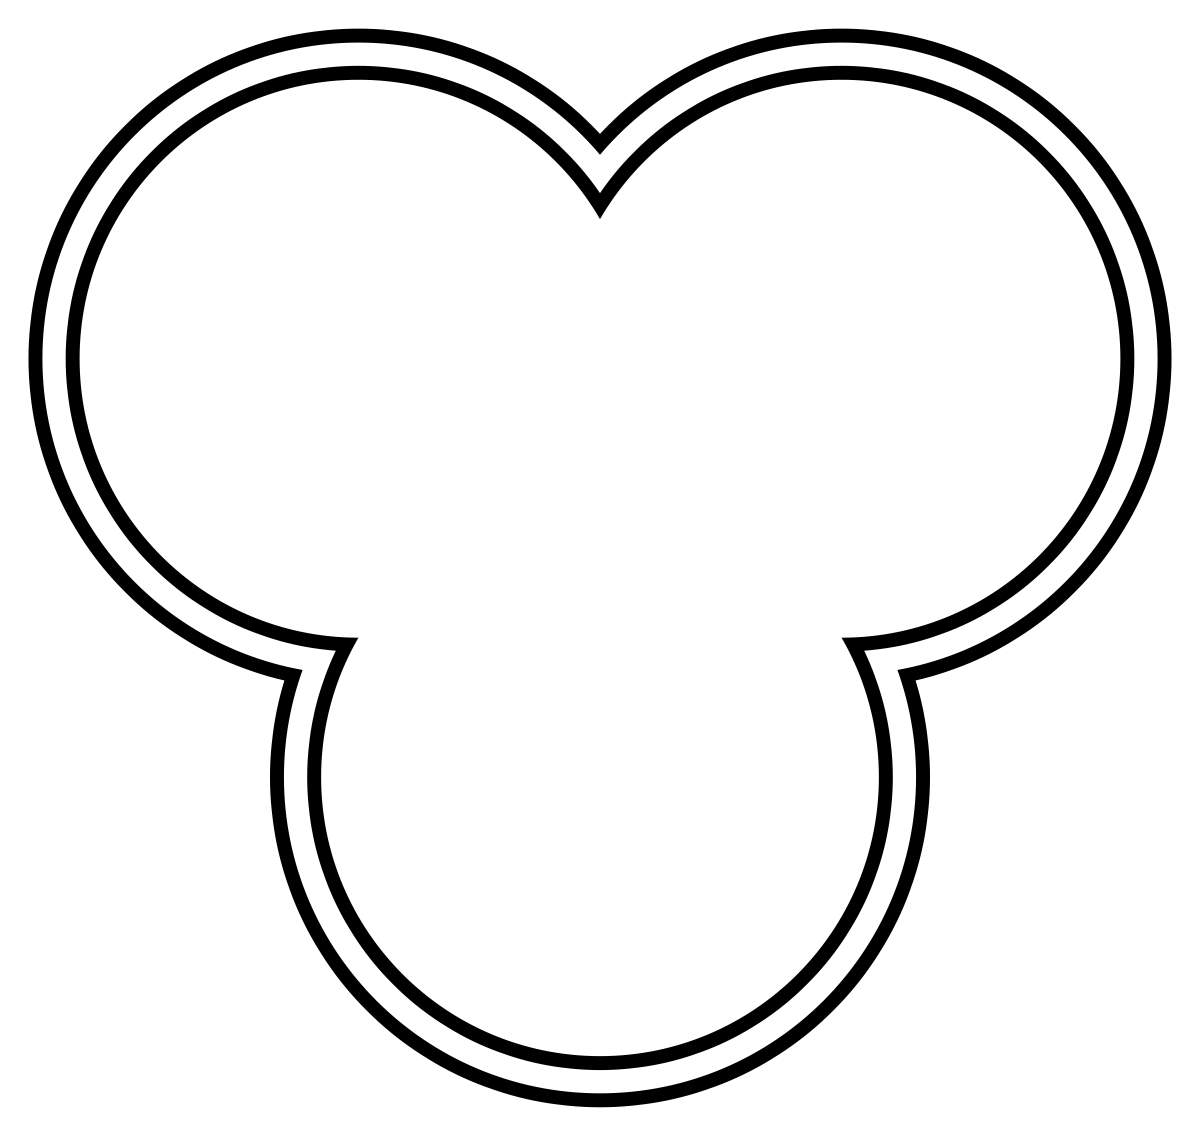 Image of a Trefoiled shape